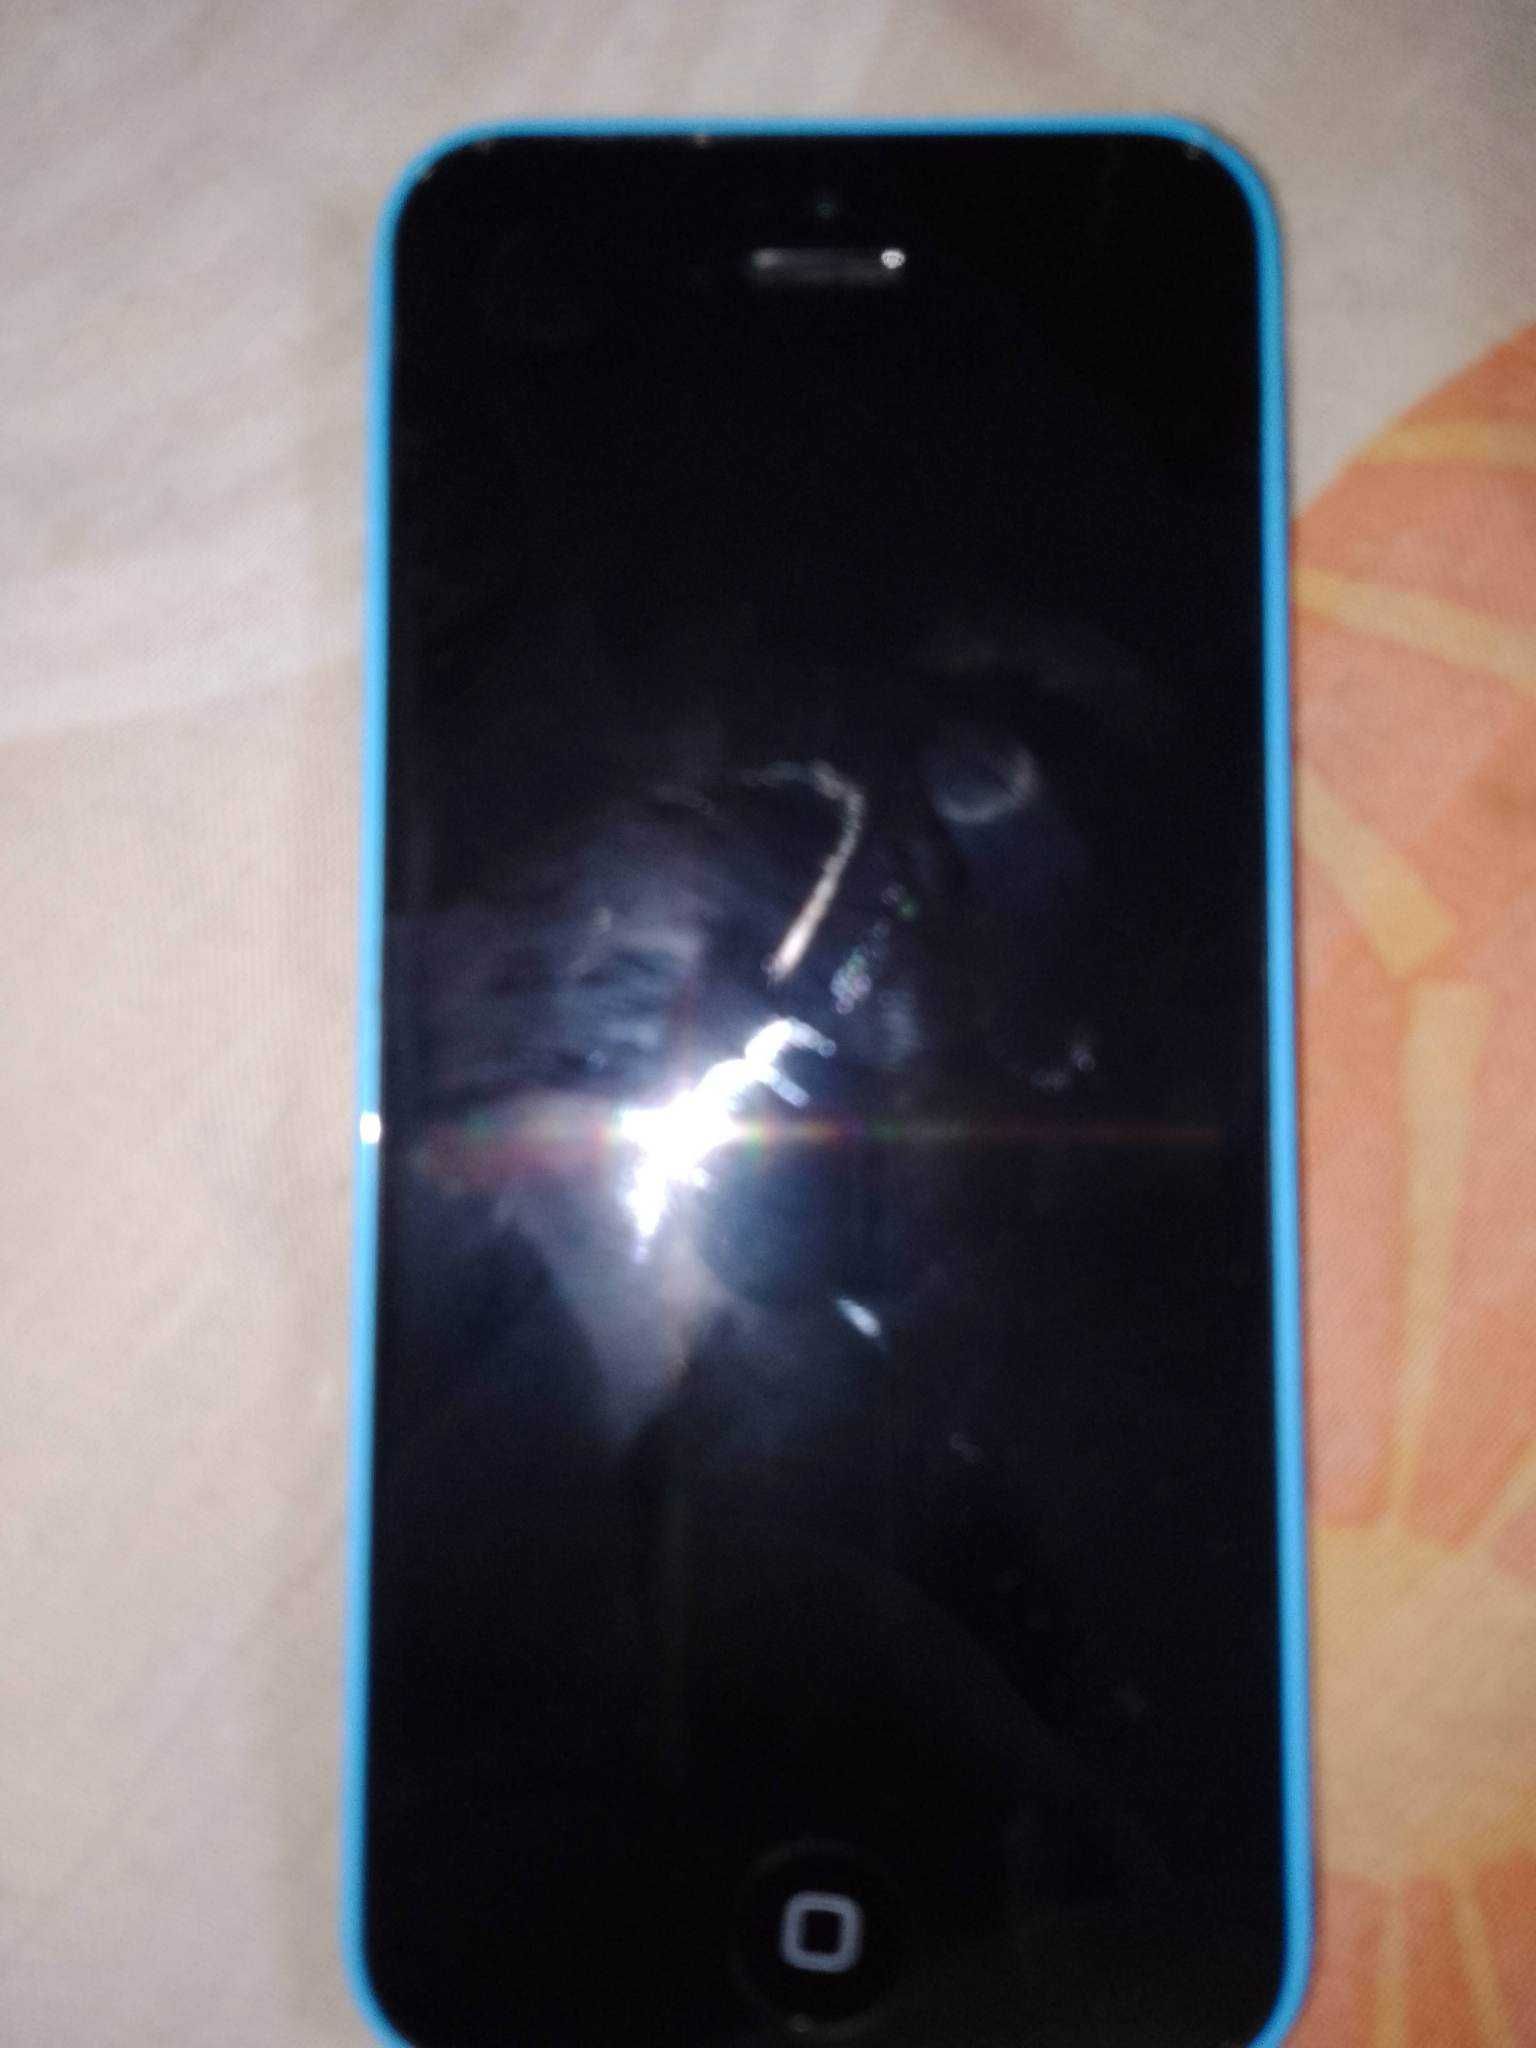 iPhone 5 c niebieski